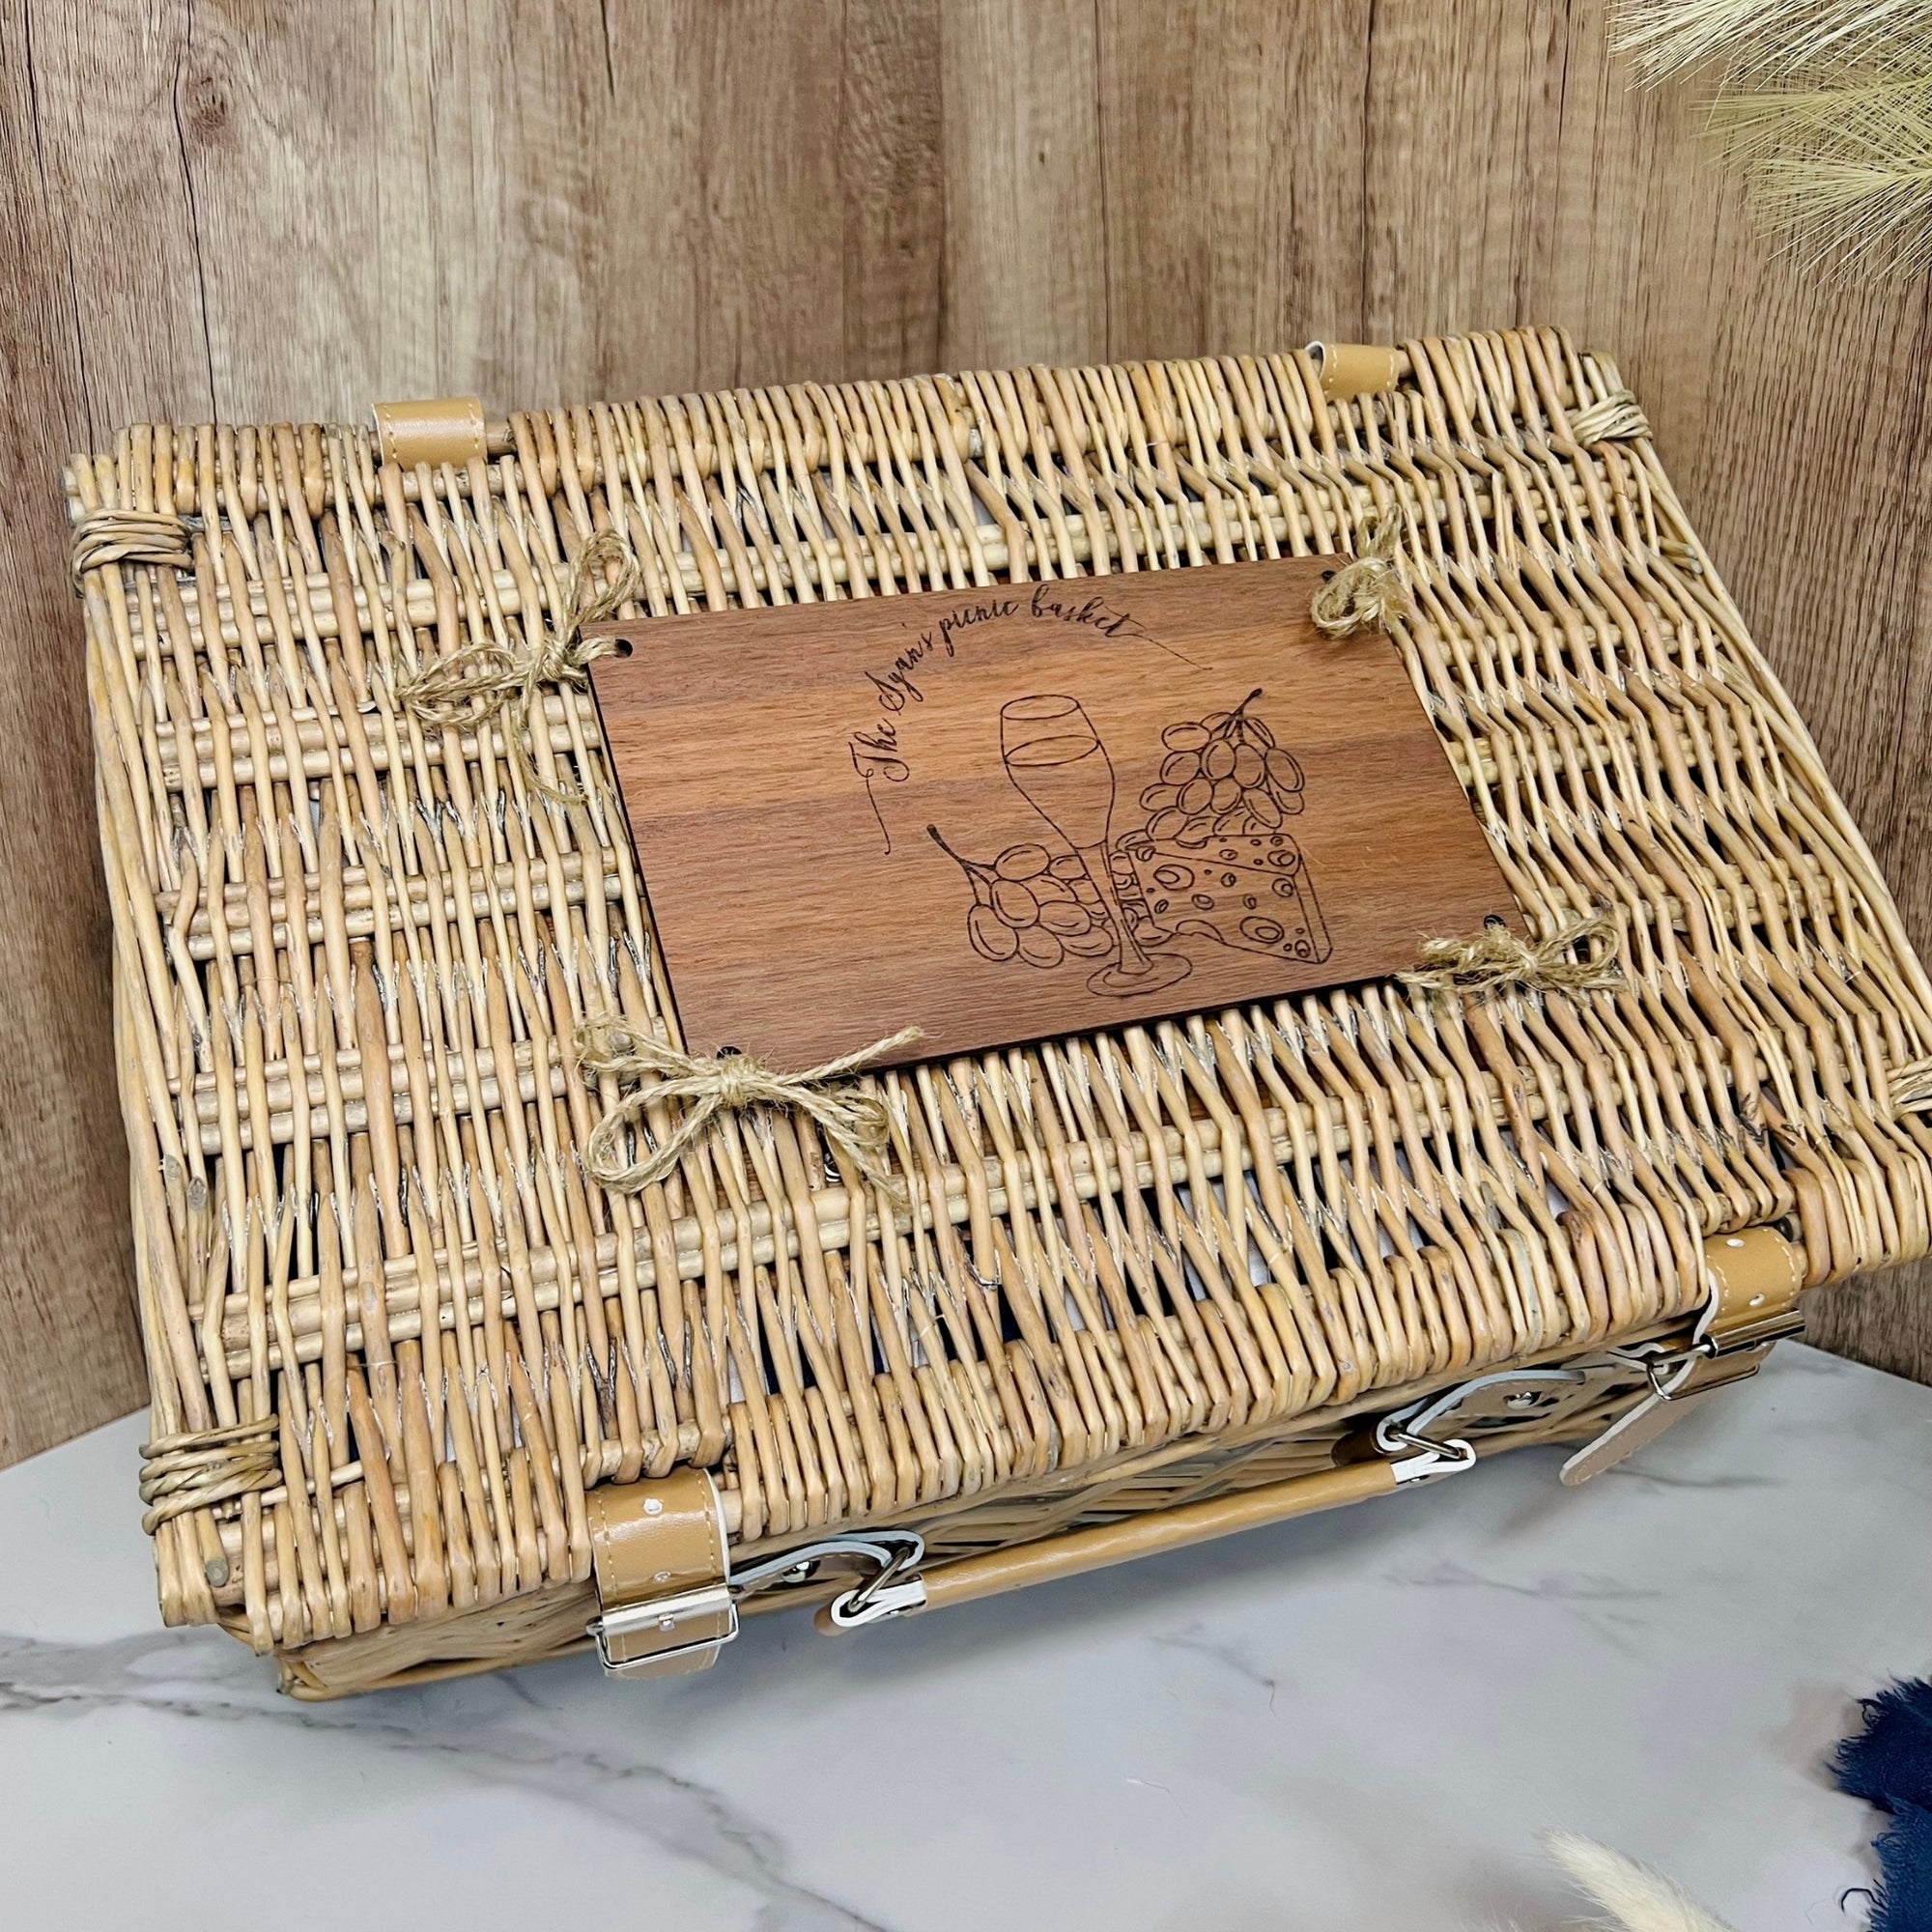 Custom Engraved Cooler Picnic Wicker Basket 4 People, Travel, Beach, Park Anniversary, Housewarming, Wedding Carry Hamper, Personalised Gift